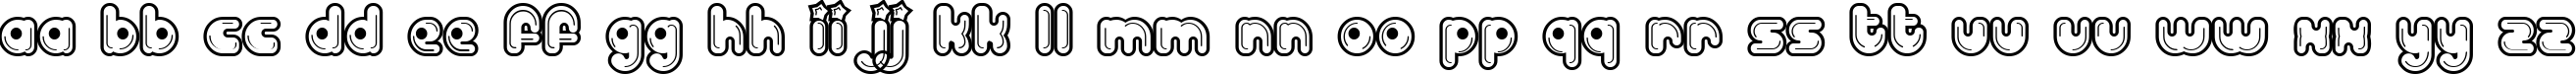 Пример написания английского алфавита шрифтом Billo Dream